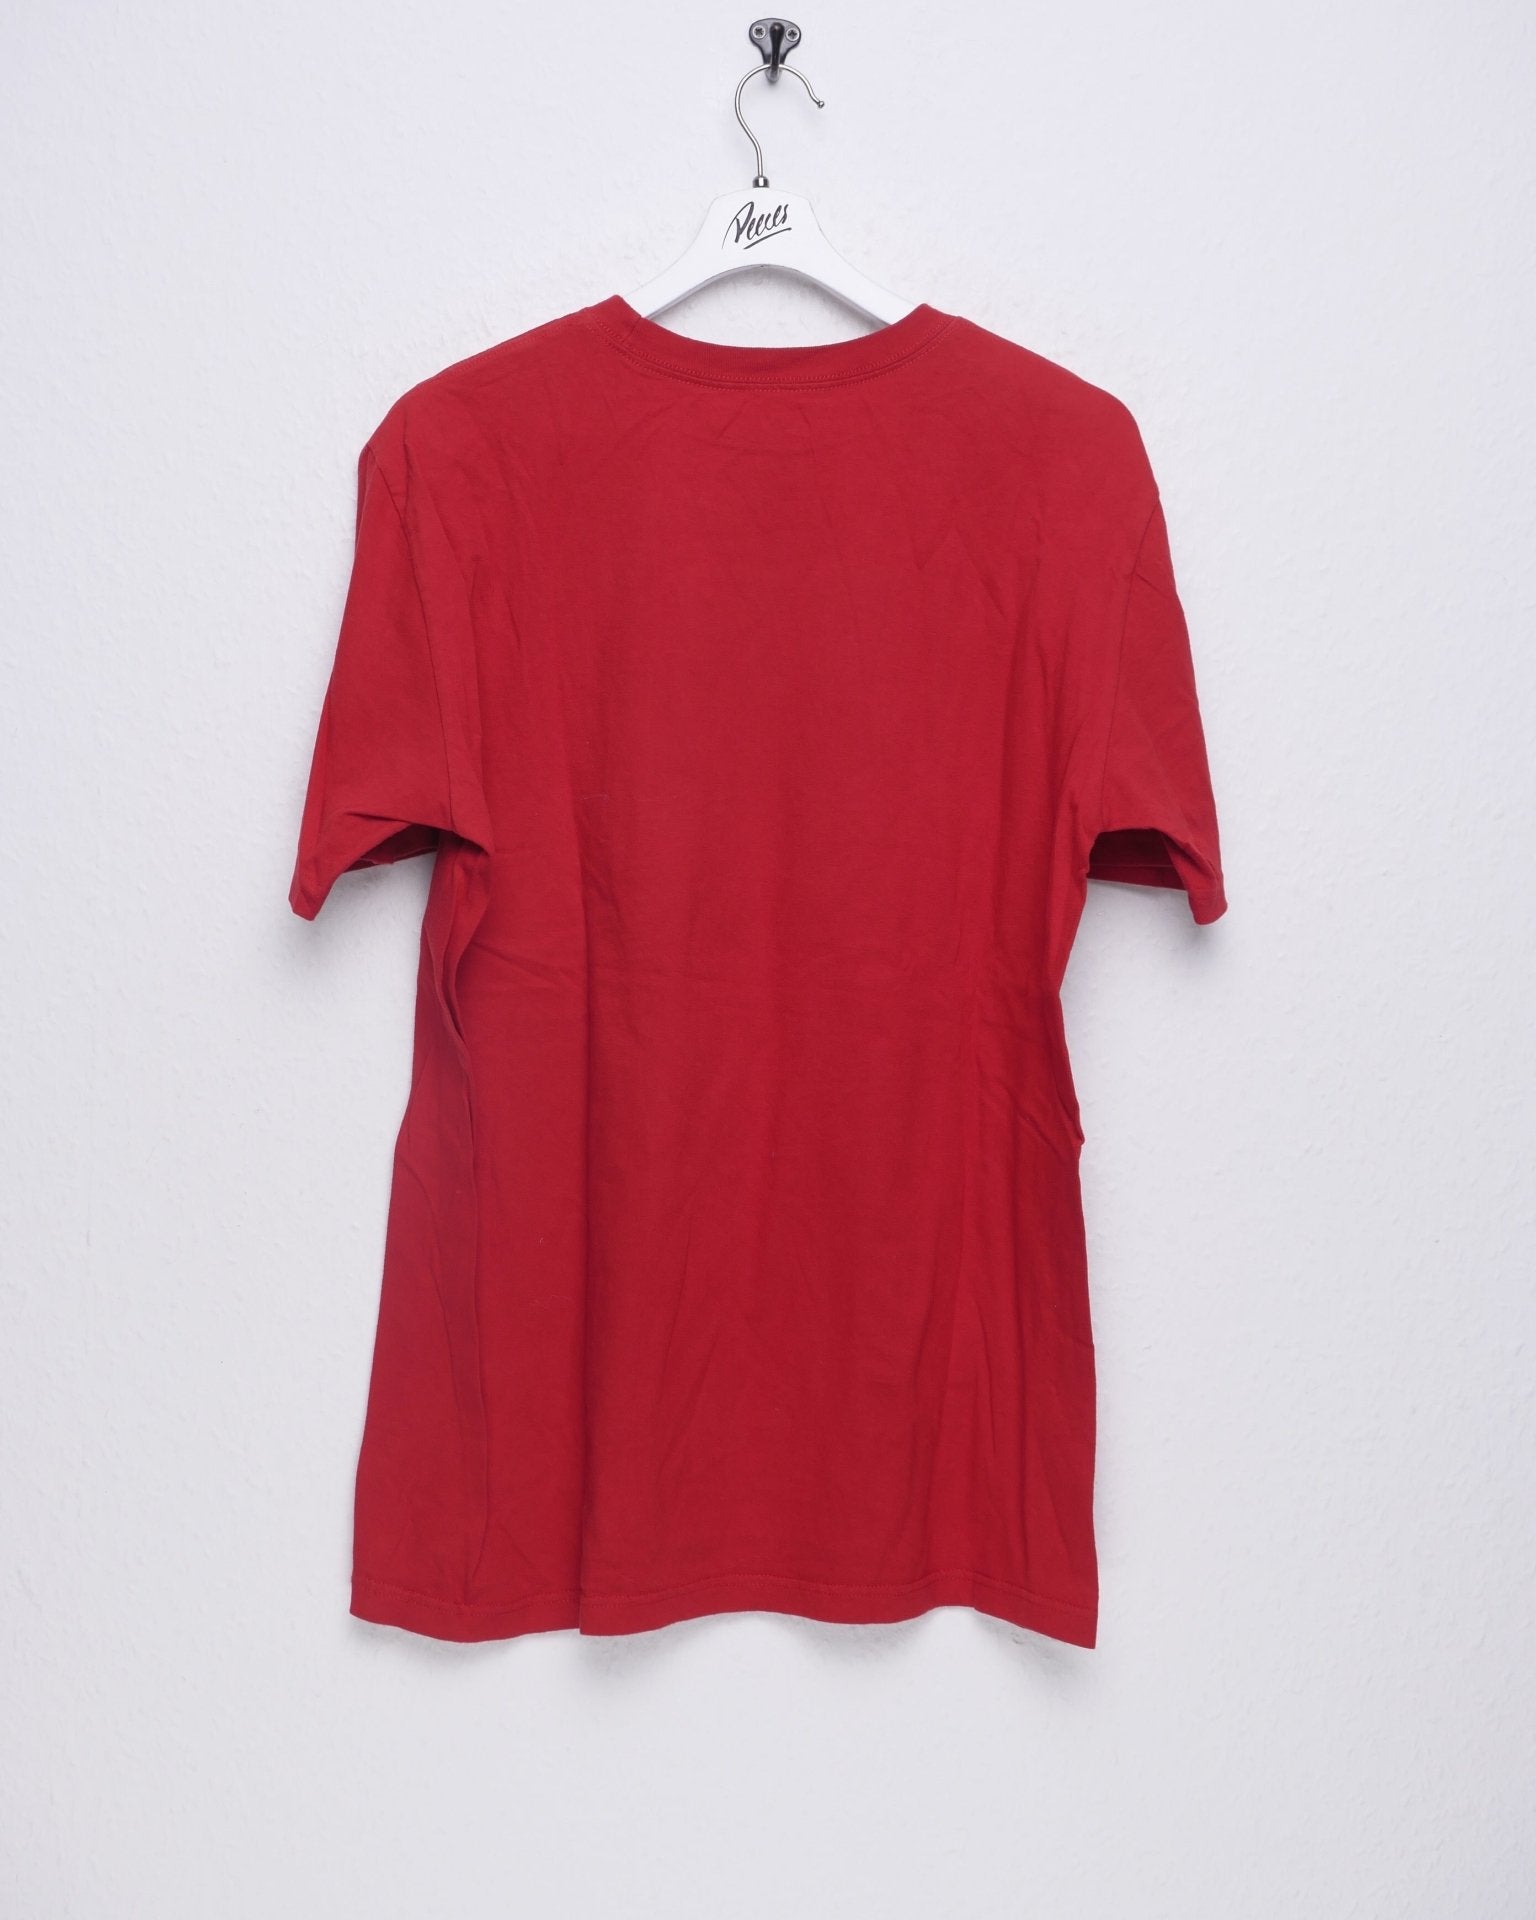 Nike printed Logo red Shirt - Peeces